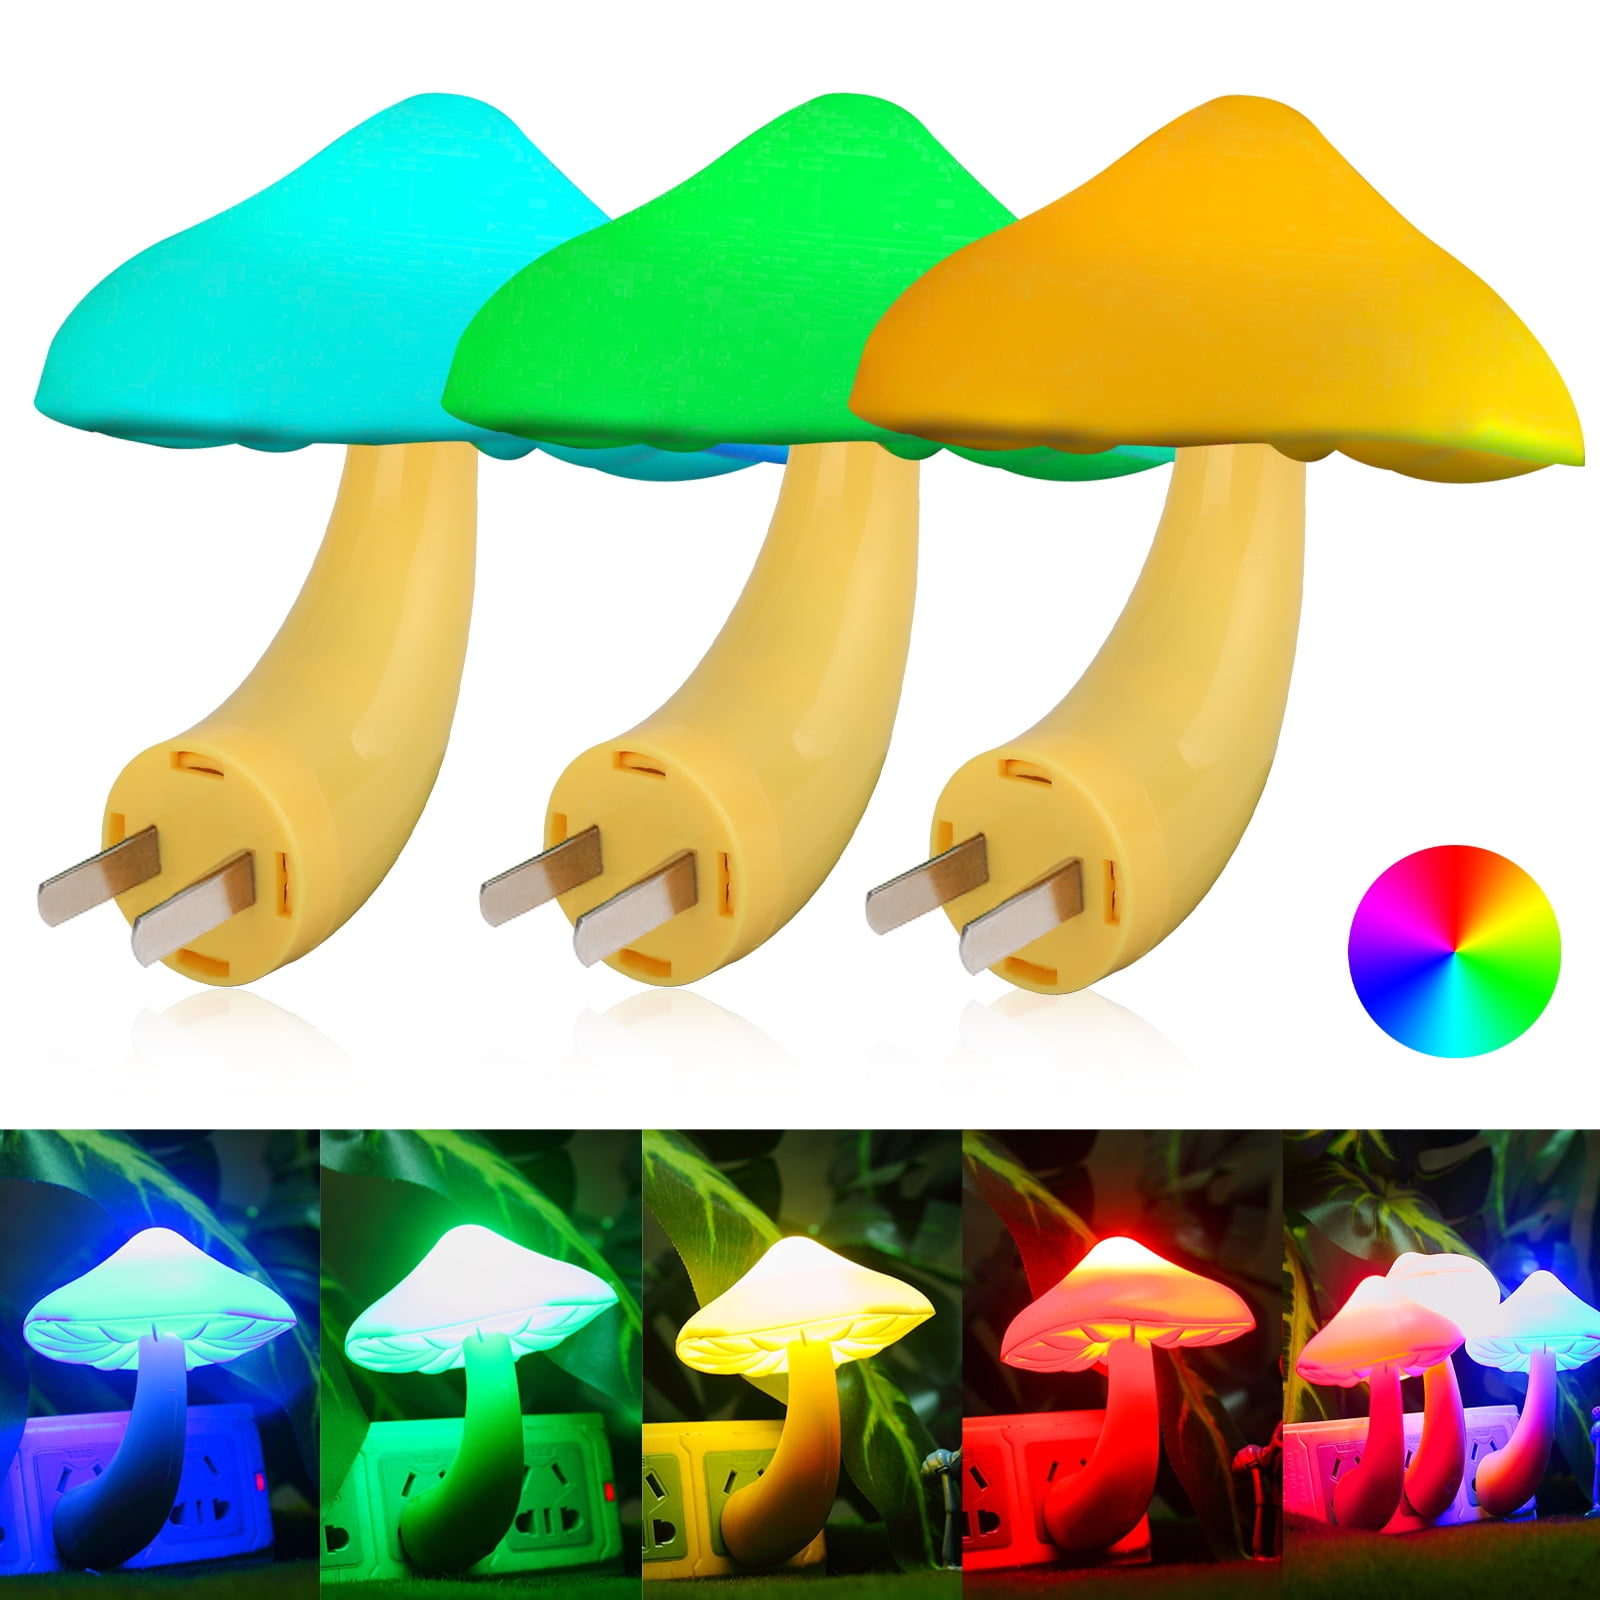 Details about   Energy Saving Mushroom LED Night Light Sensor Control Lamp Bedside Wall Garden 